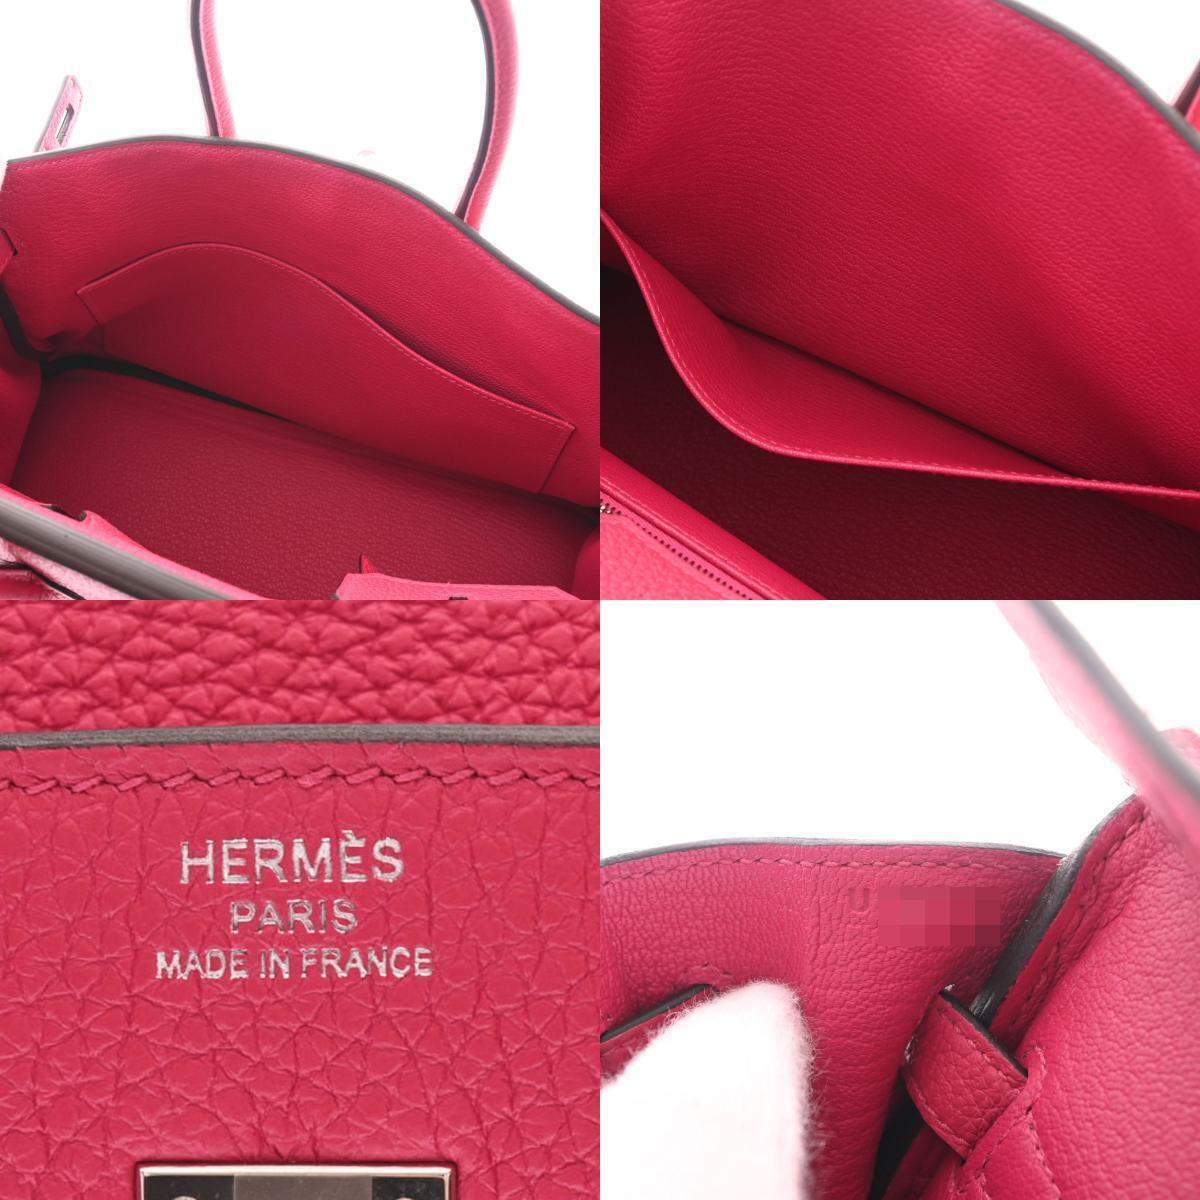 Hermès - Authenticated Birkin 25 Handbag - Leather Pink Plain for Women, Very Good Condition